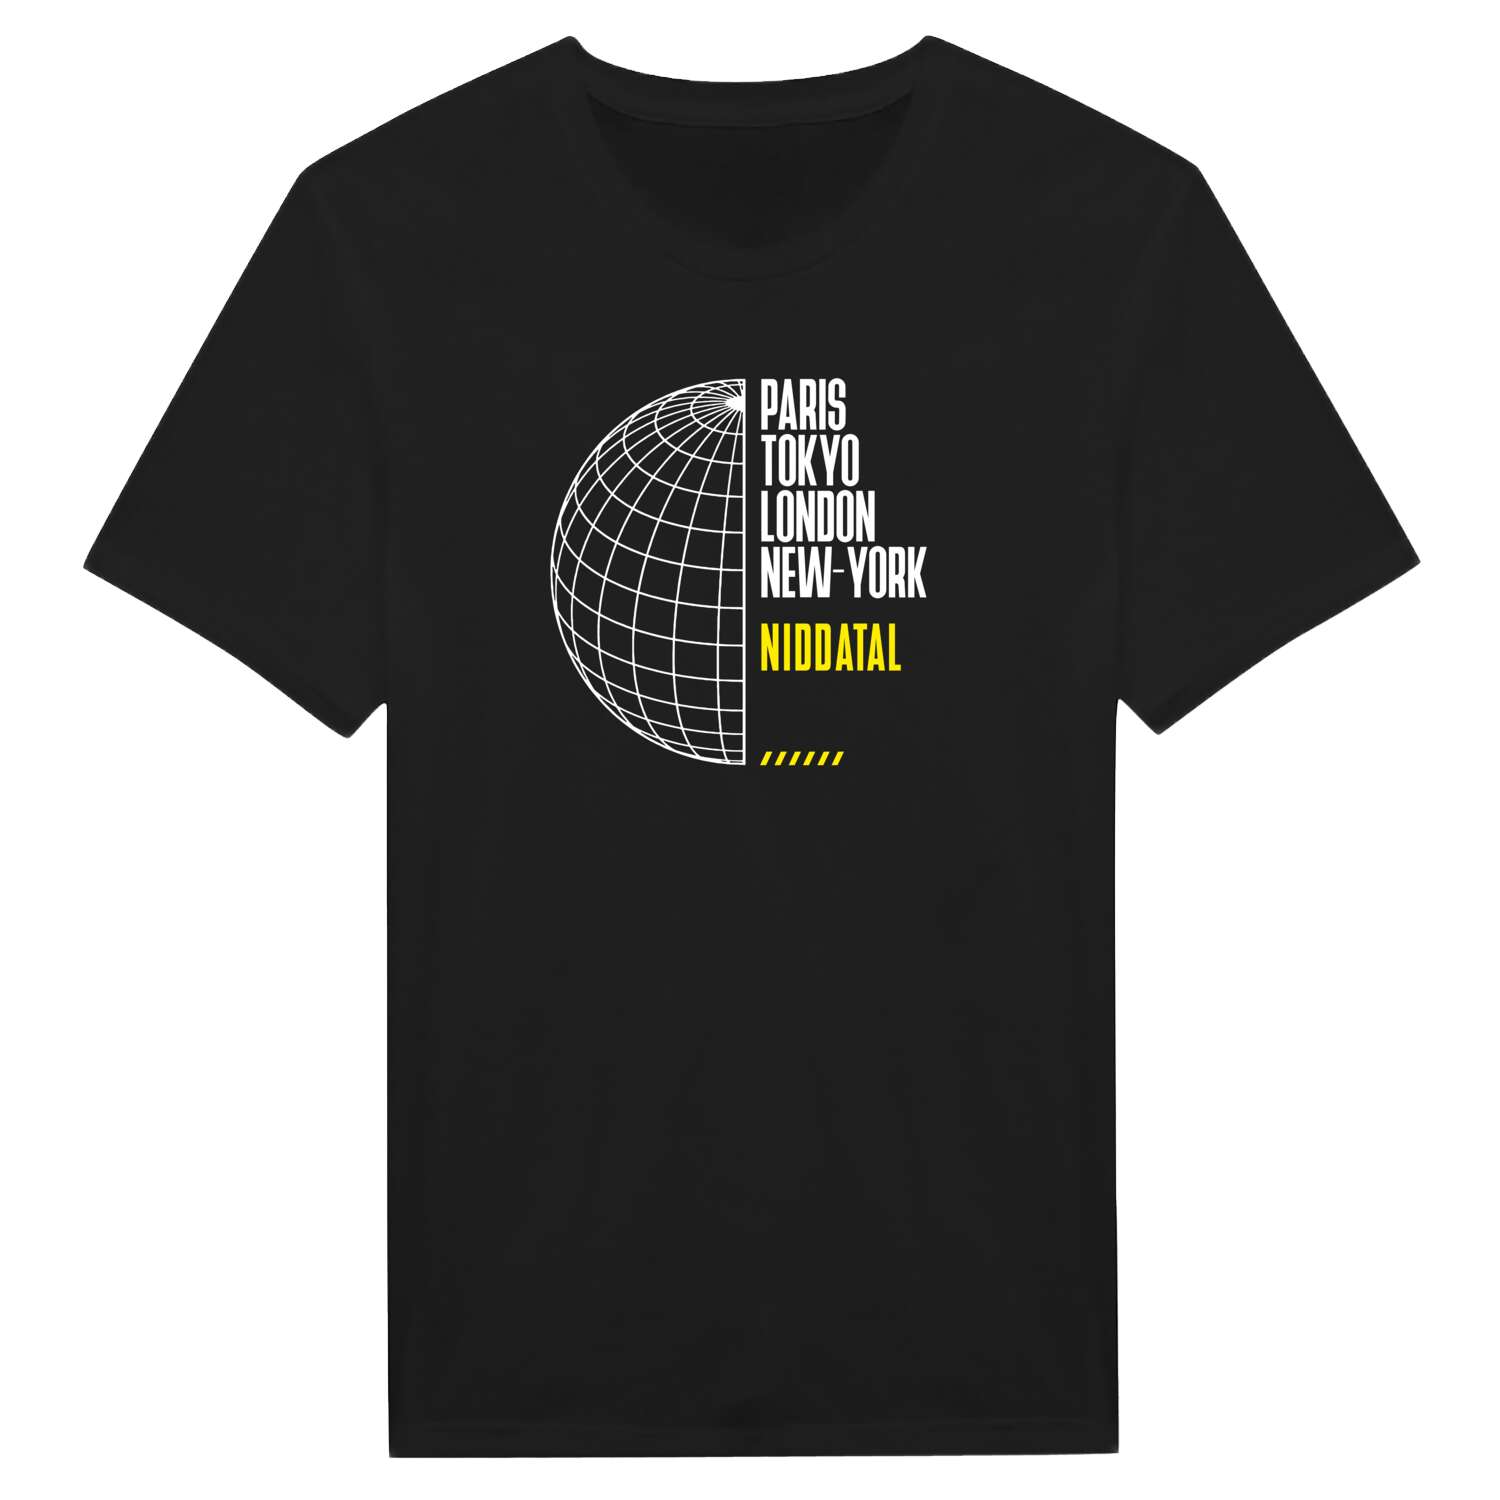 Niddatal T-Shirt »Paris Tokyo London«